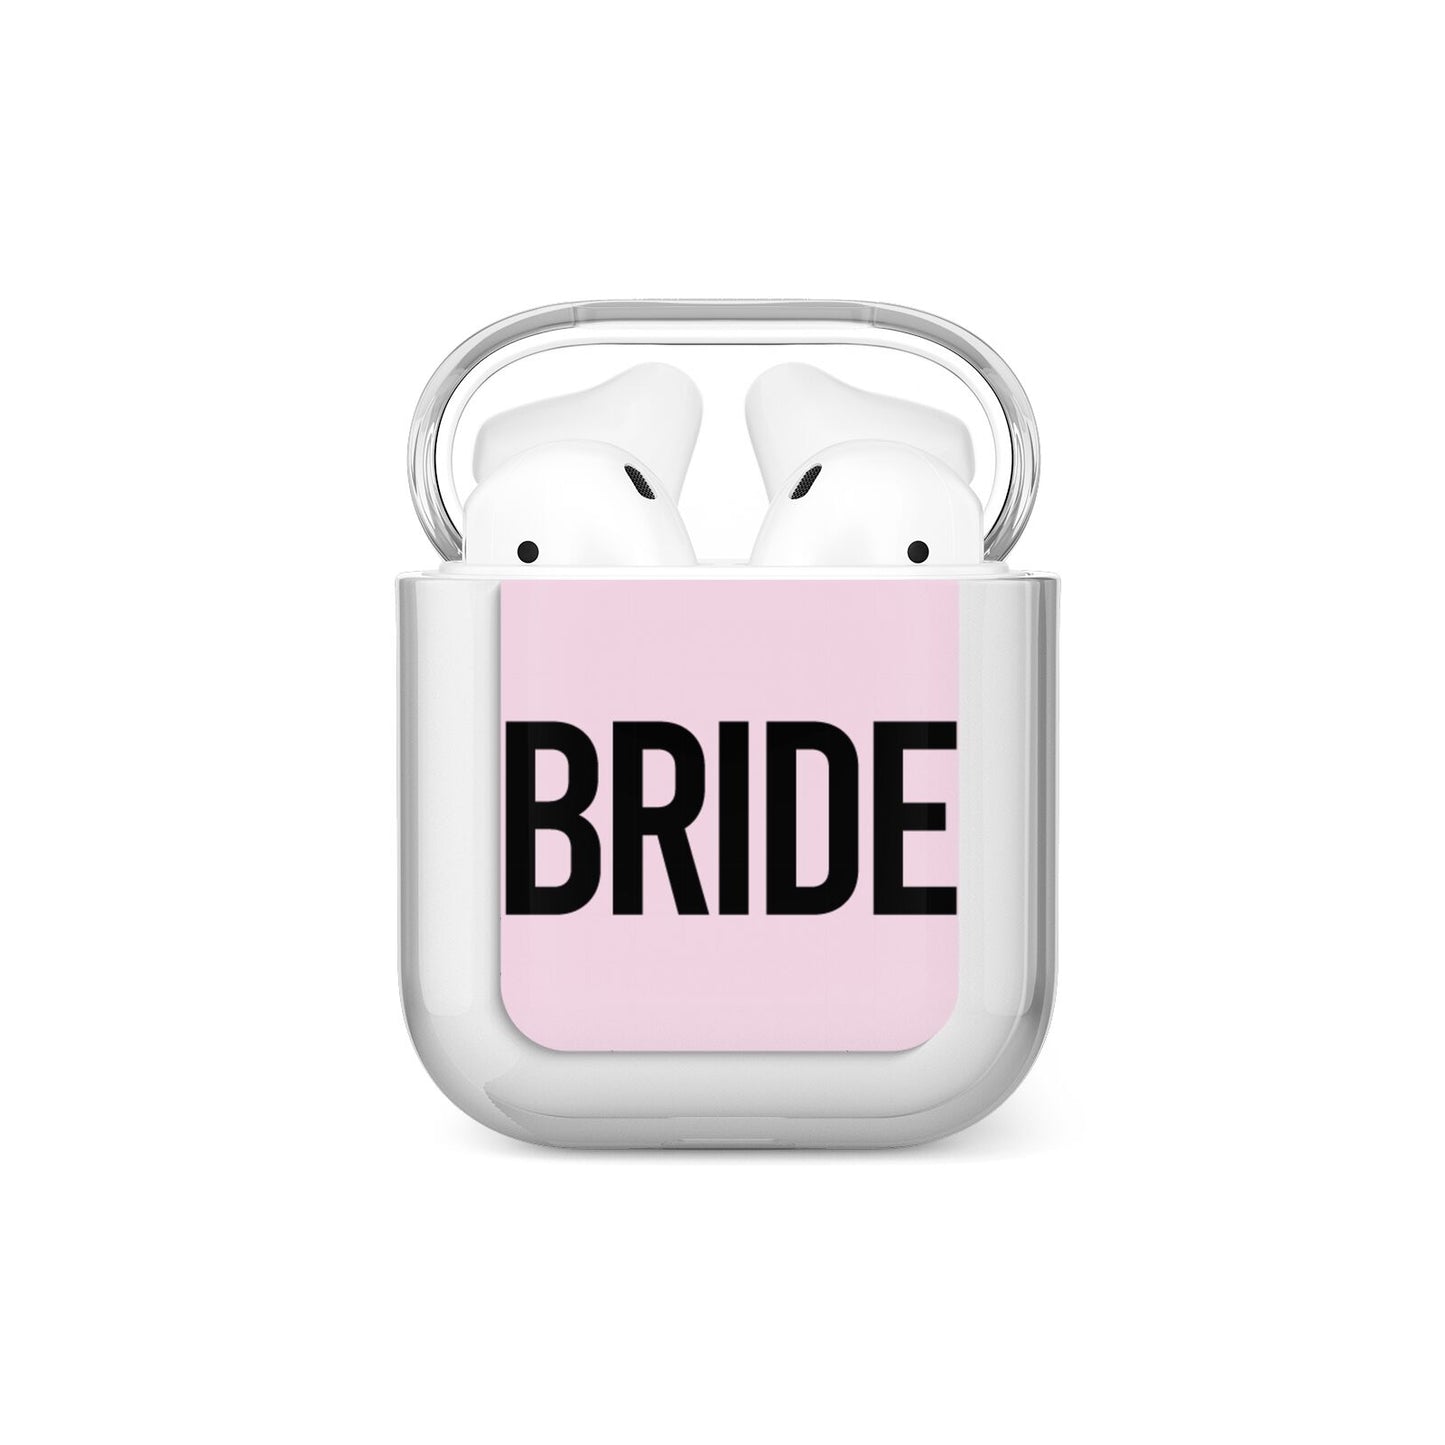 Bride AirPods Case